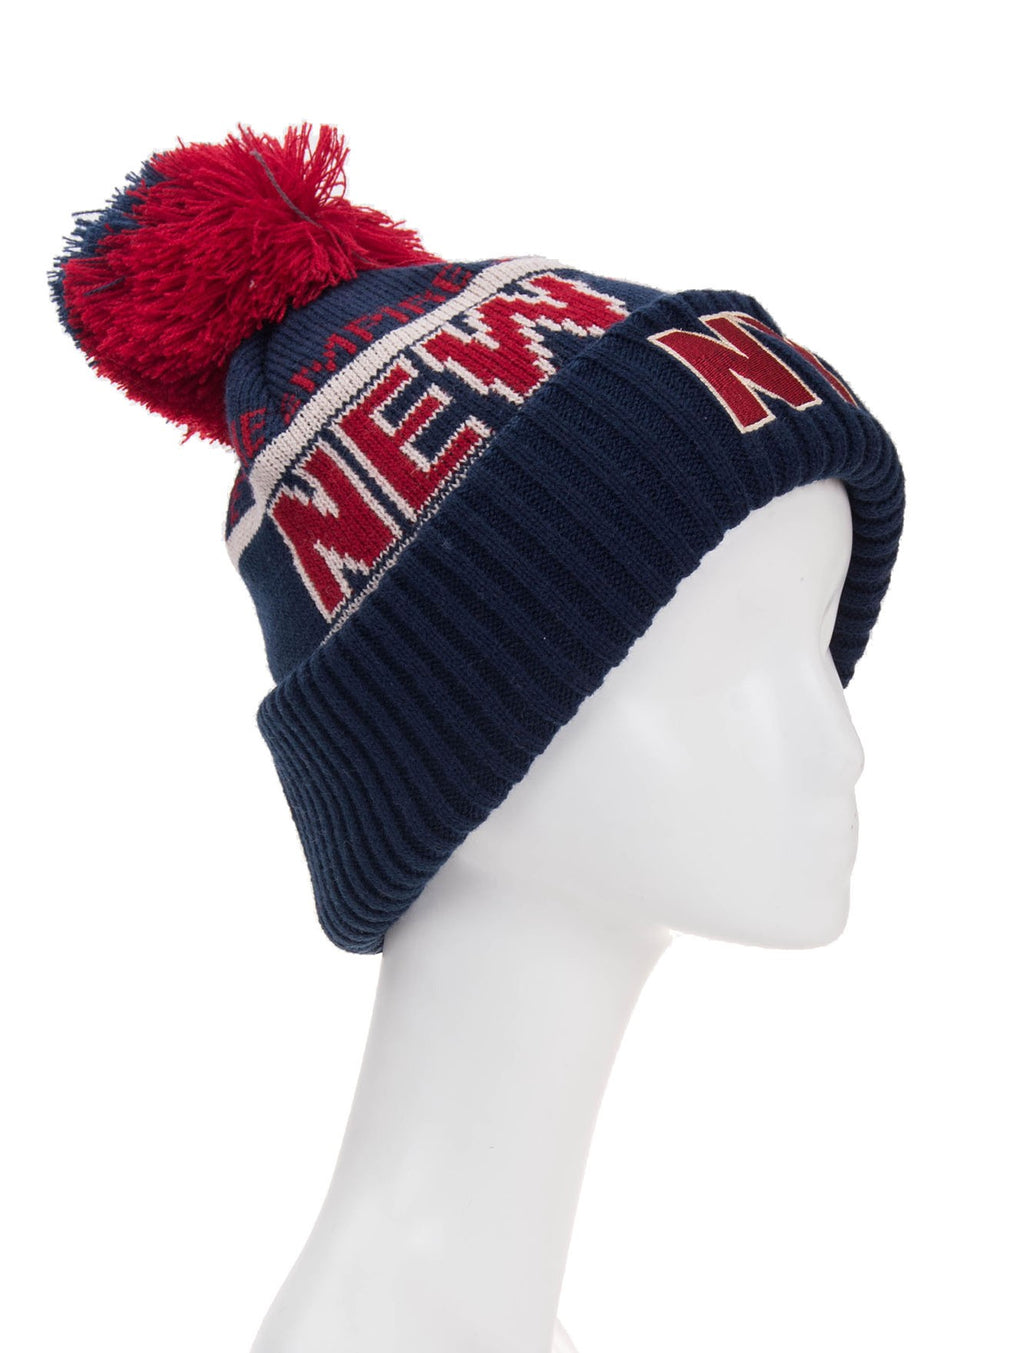 Adidas New York Rangers Winter Classic Knit Hat